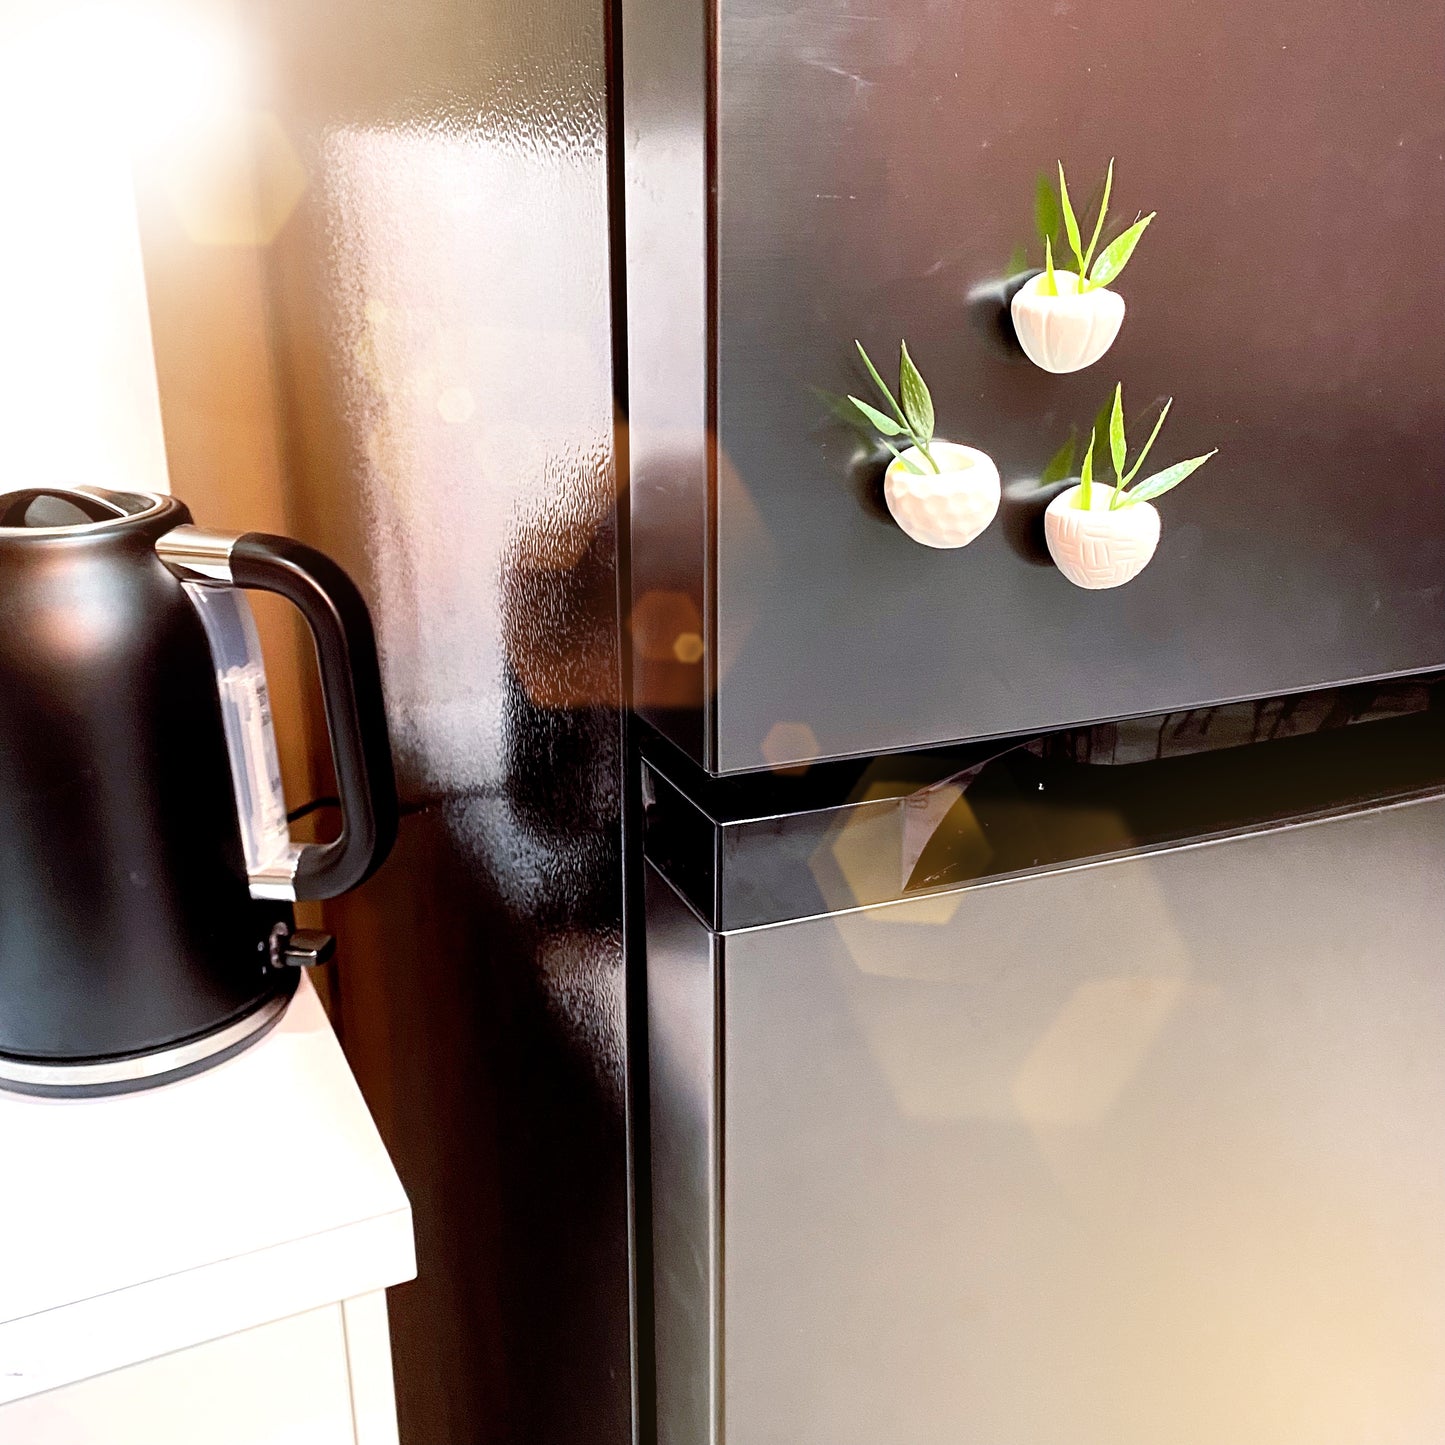 polymer clay handmade mini planters on display on the kitchen fridge